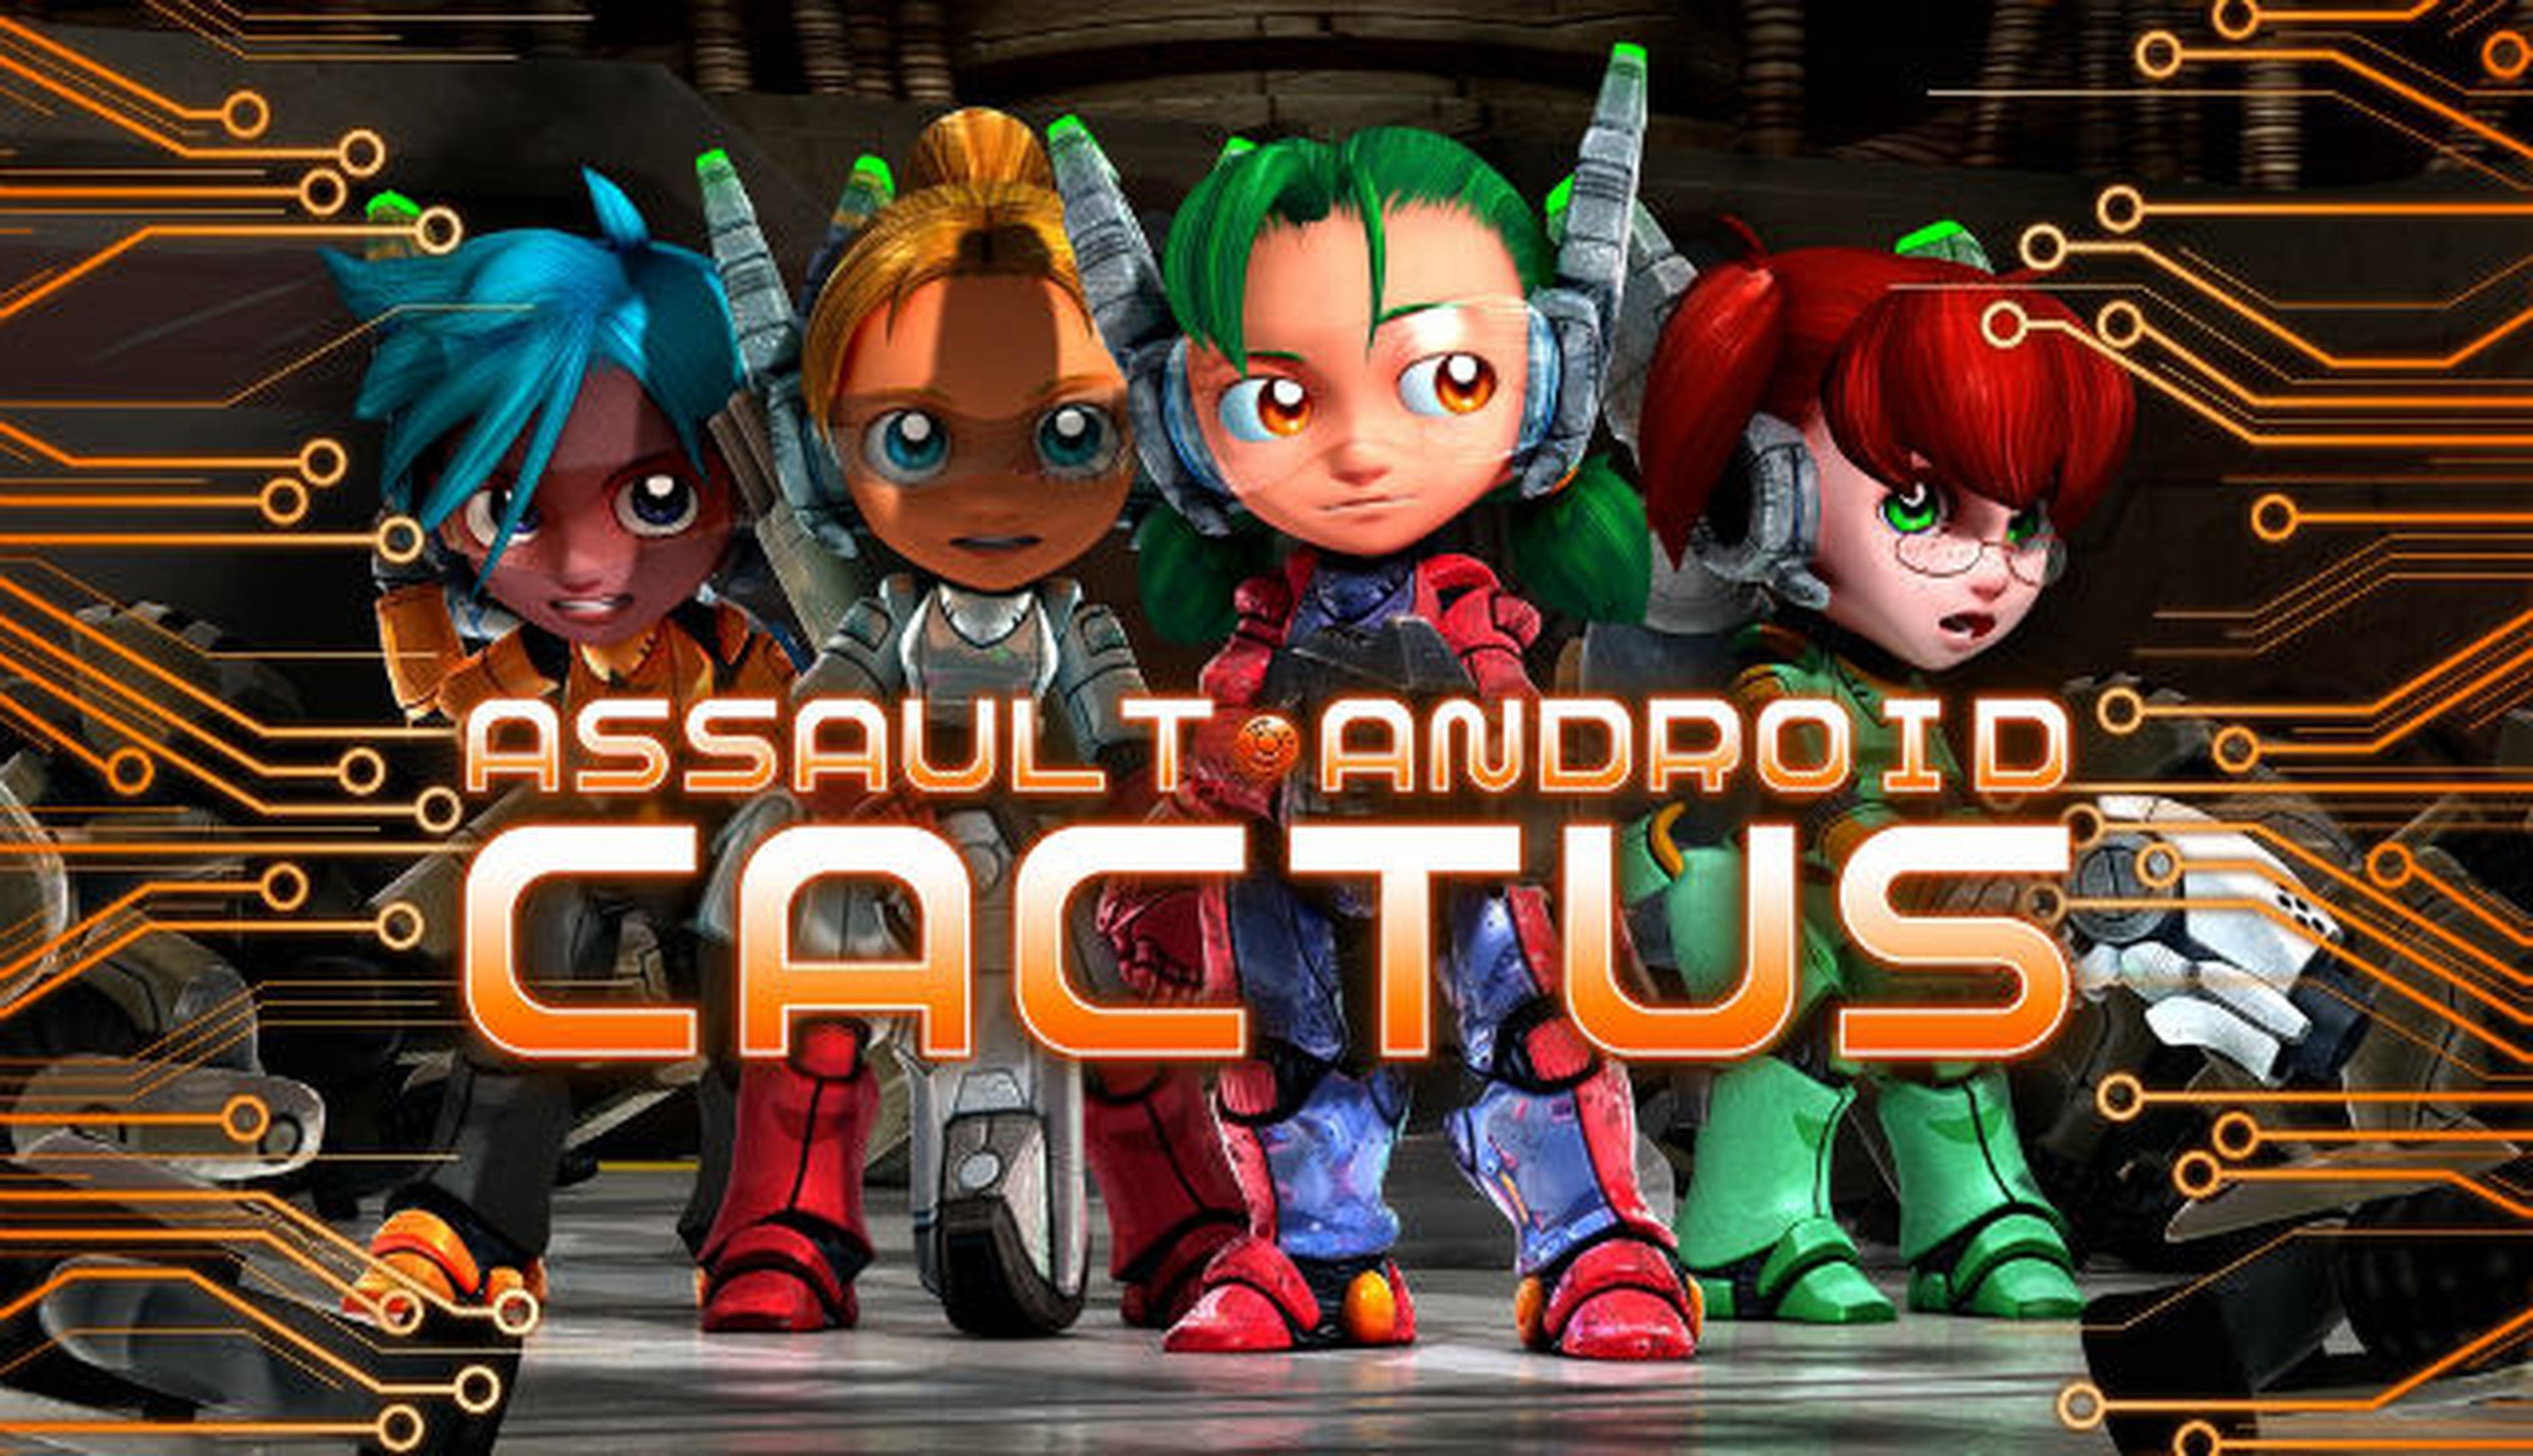 Assault Android Cactus en Wii U el 2014